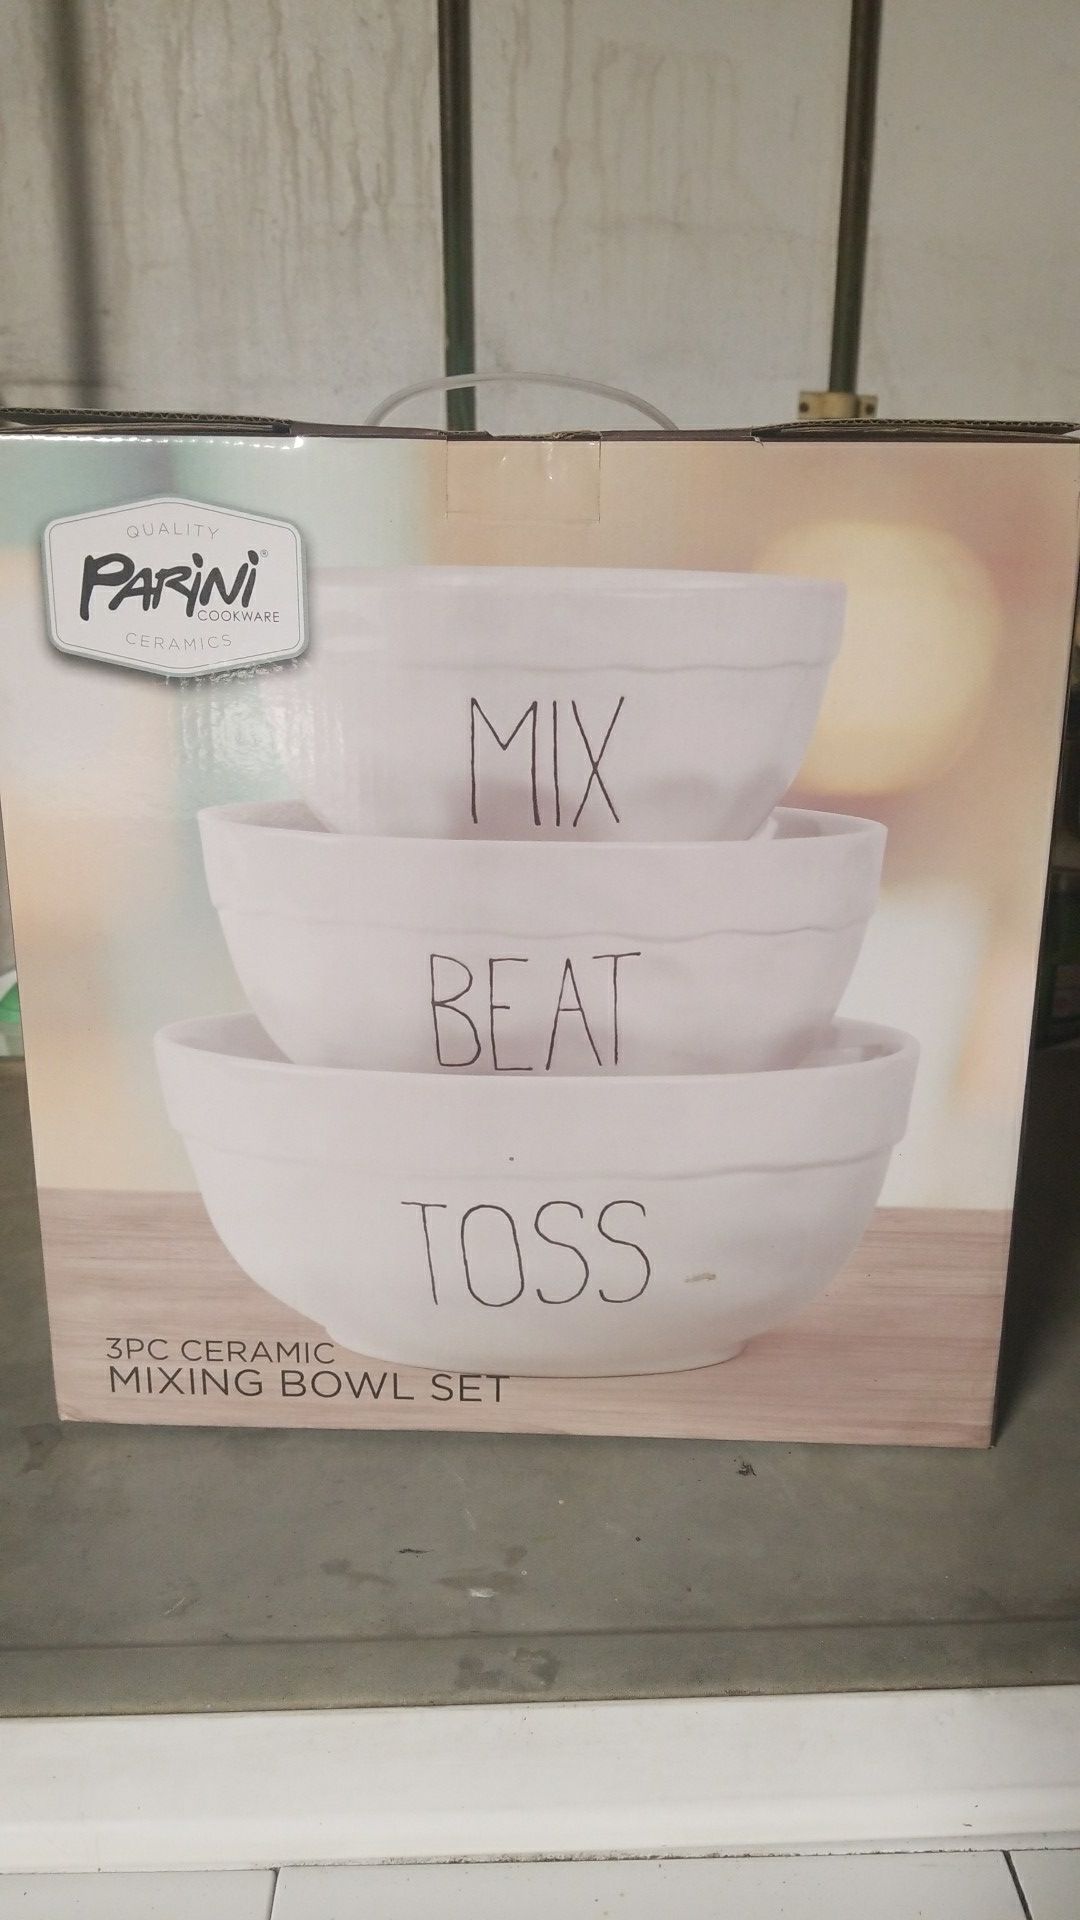 Mixing bowl set of 3